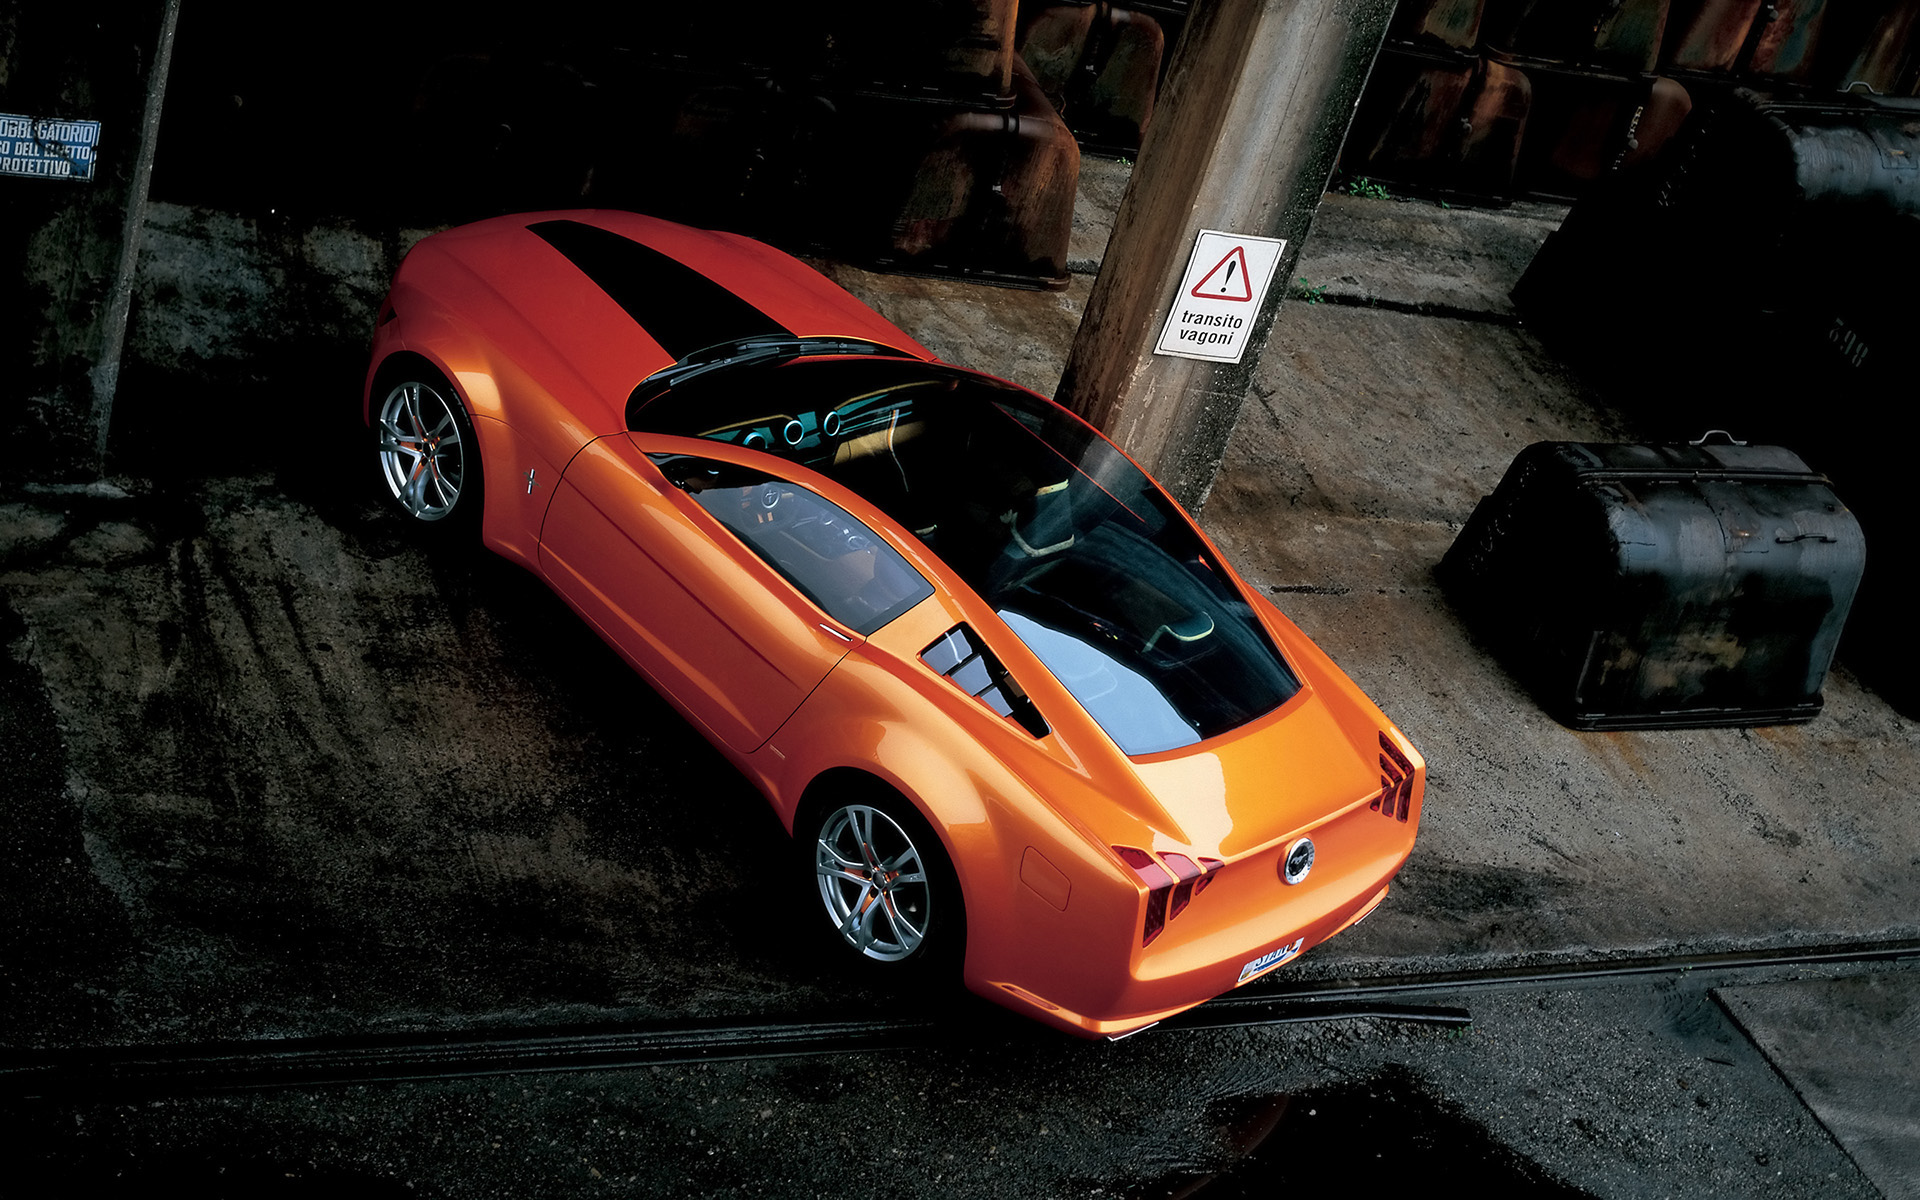  2006 Ford Mustang Giugiaro Concept Wallpaper.